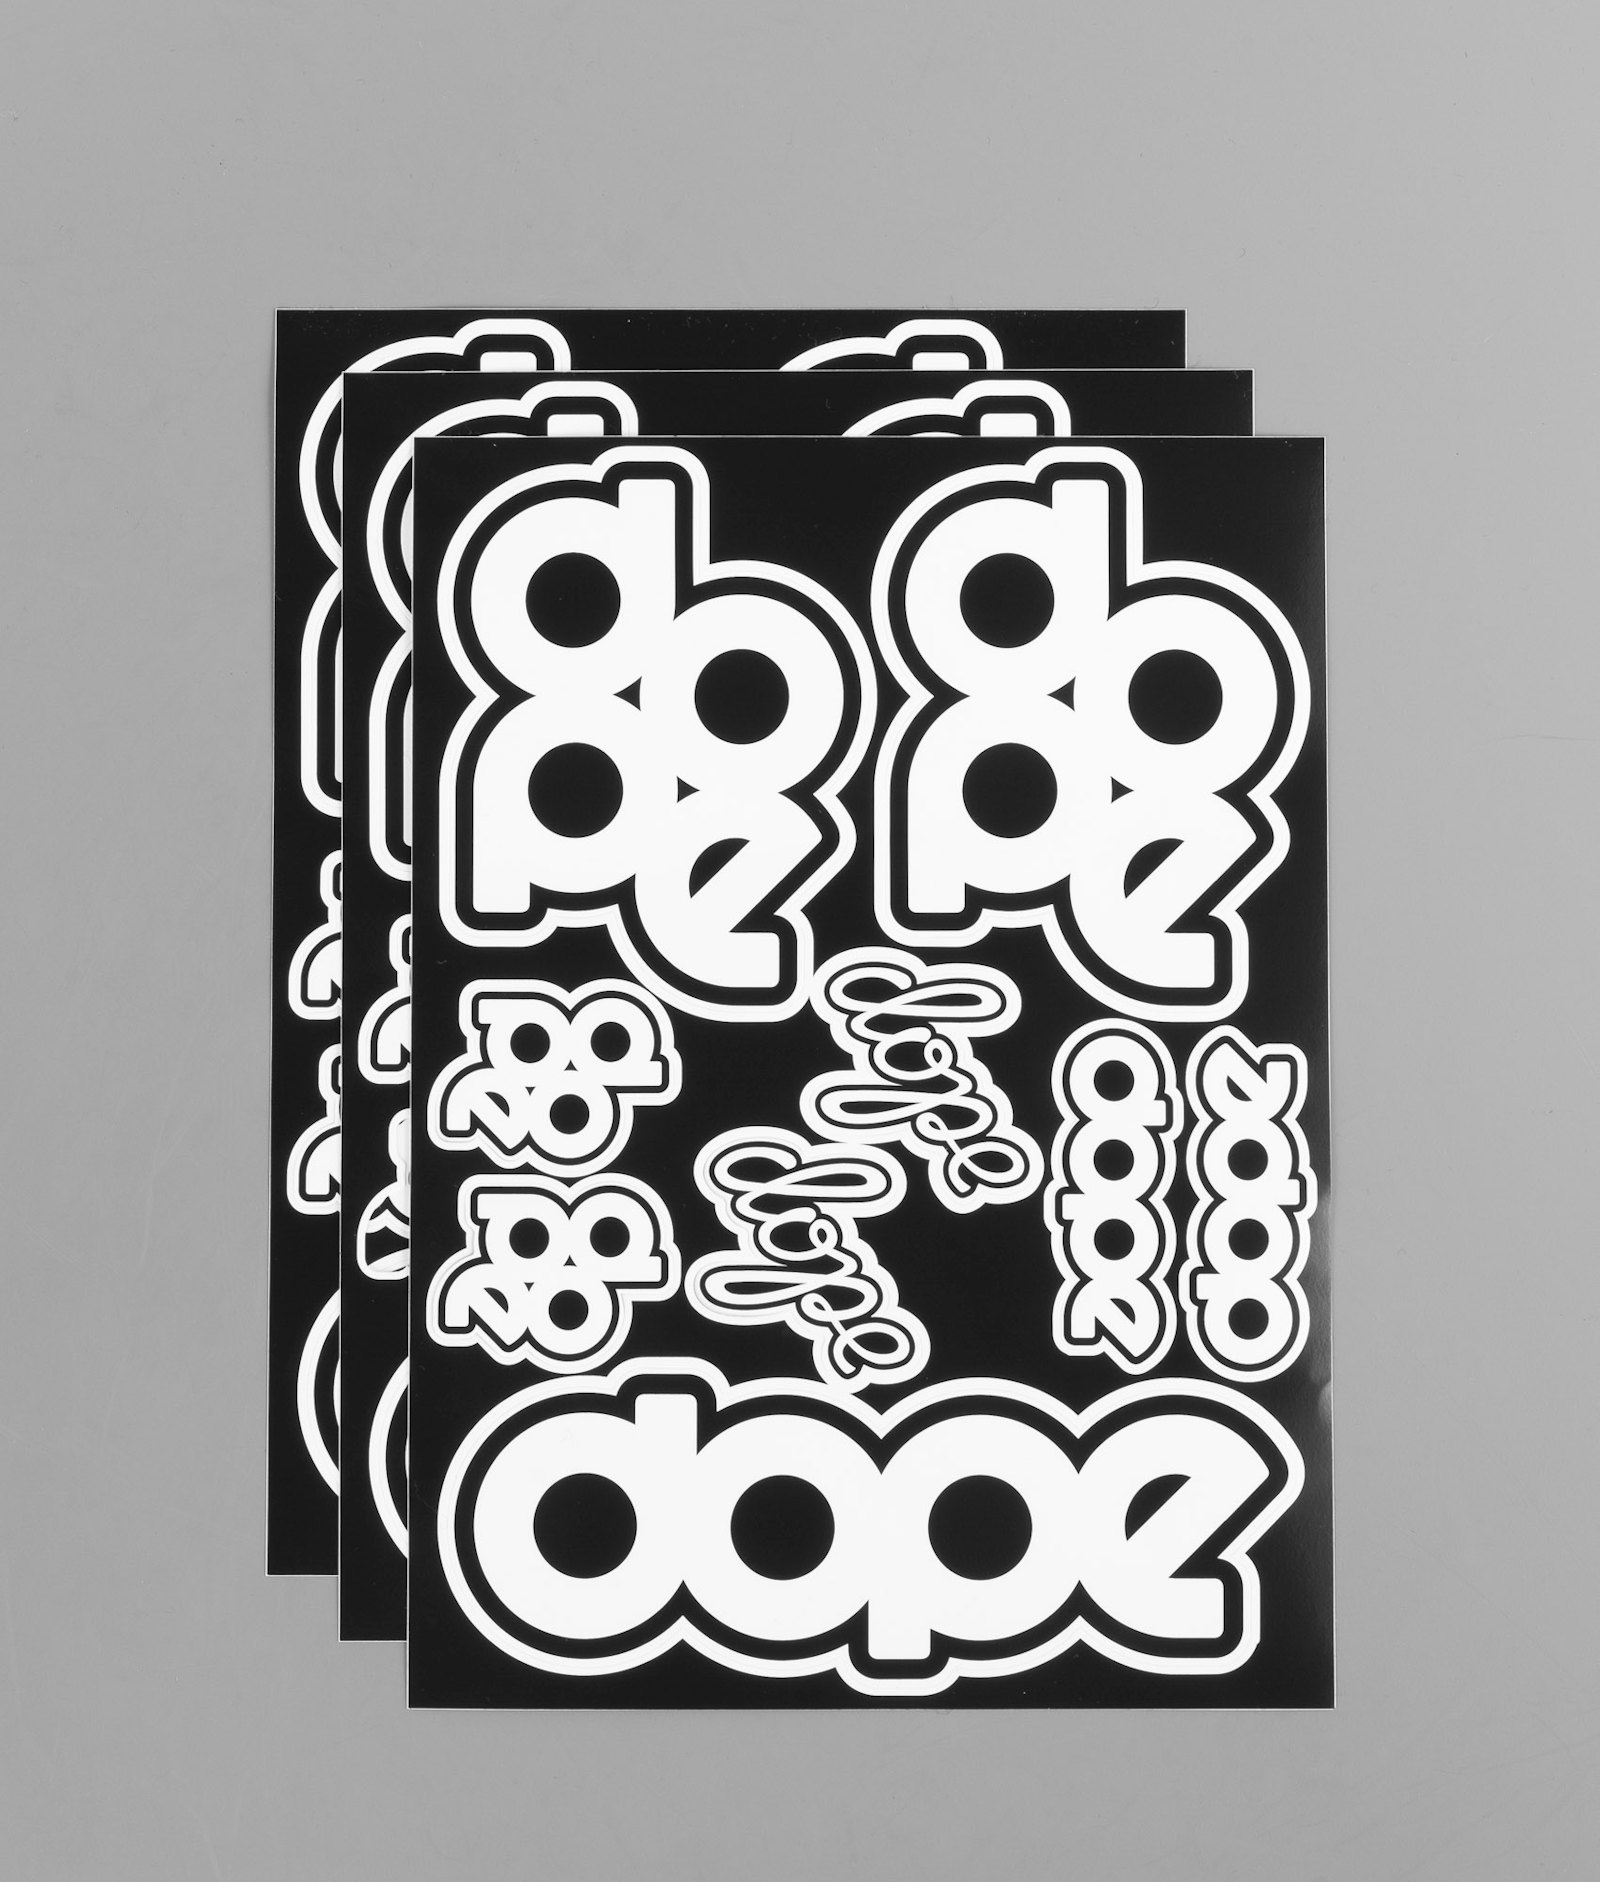 Dope Original X3 Stickers Black/White